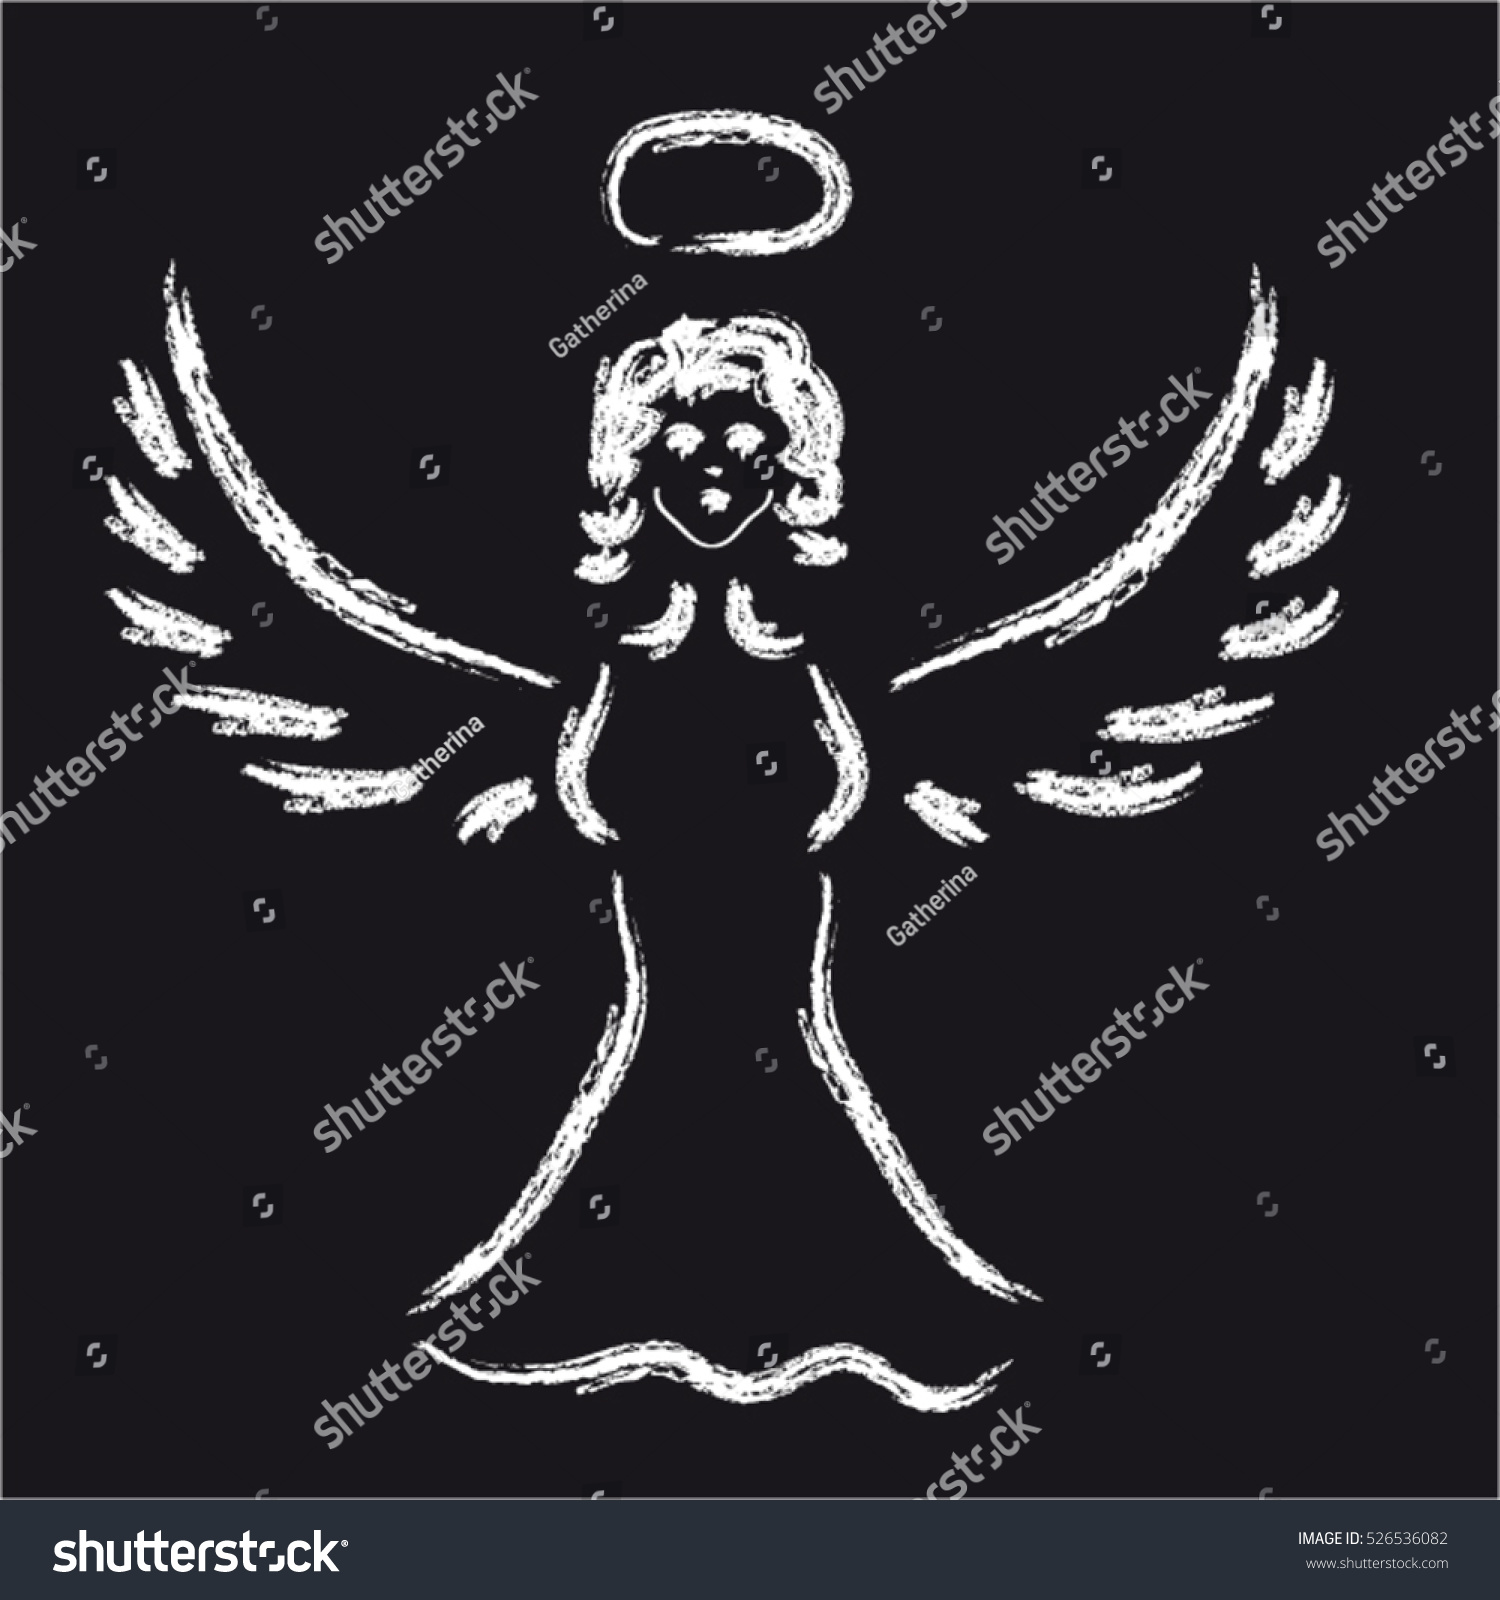 White Angel Silhouette On Black Background Stock Vector 526536082 ...